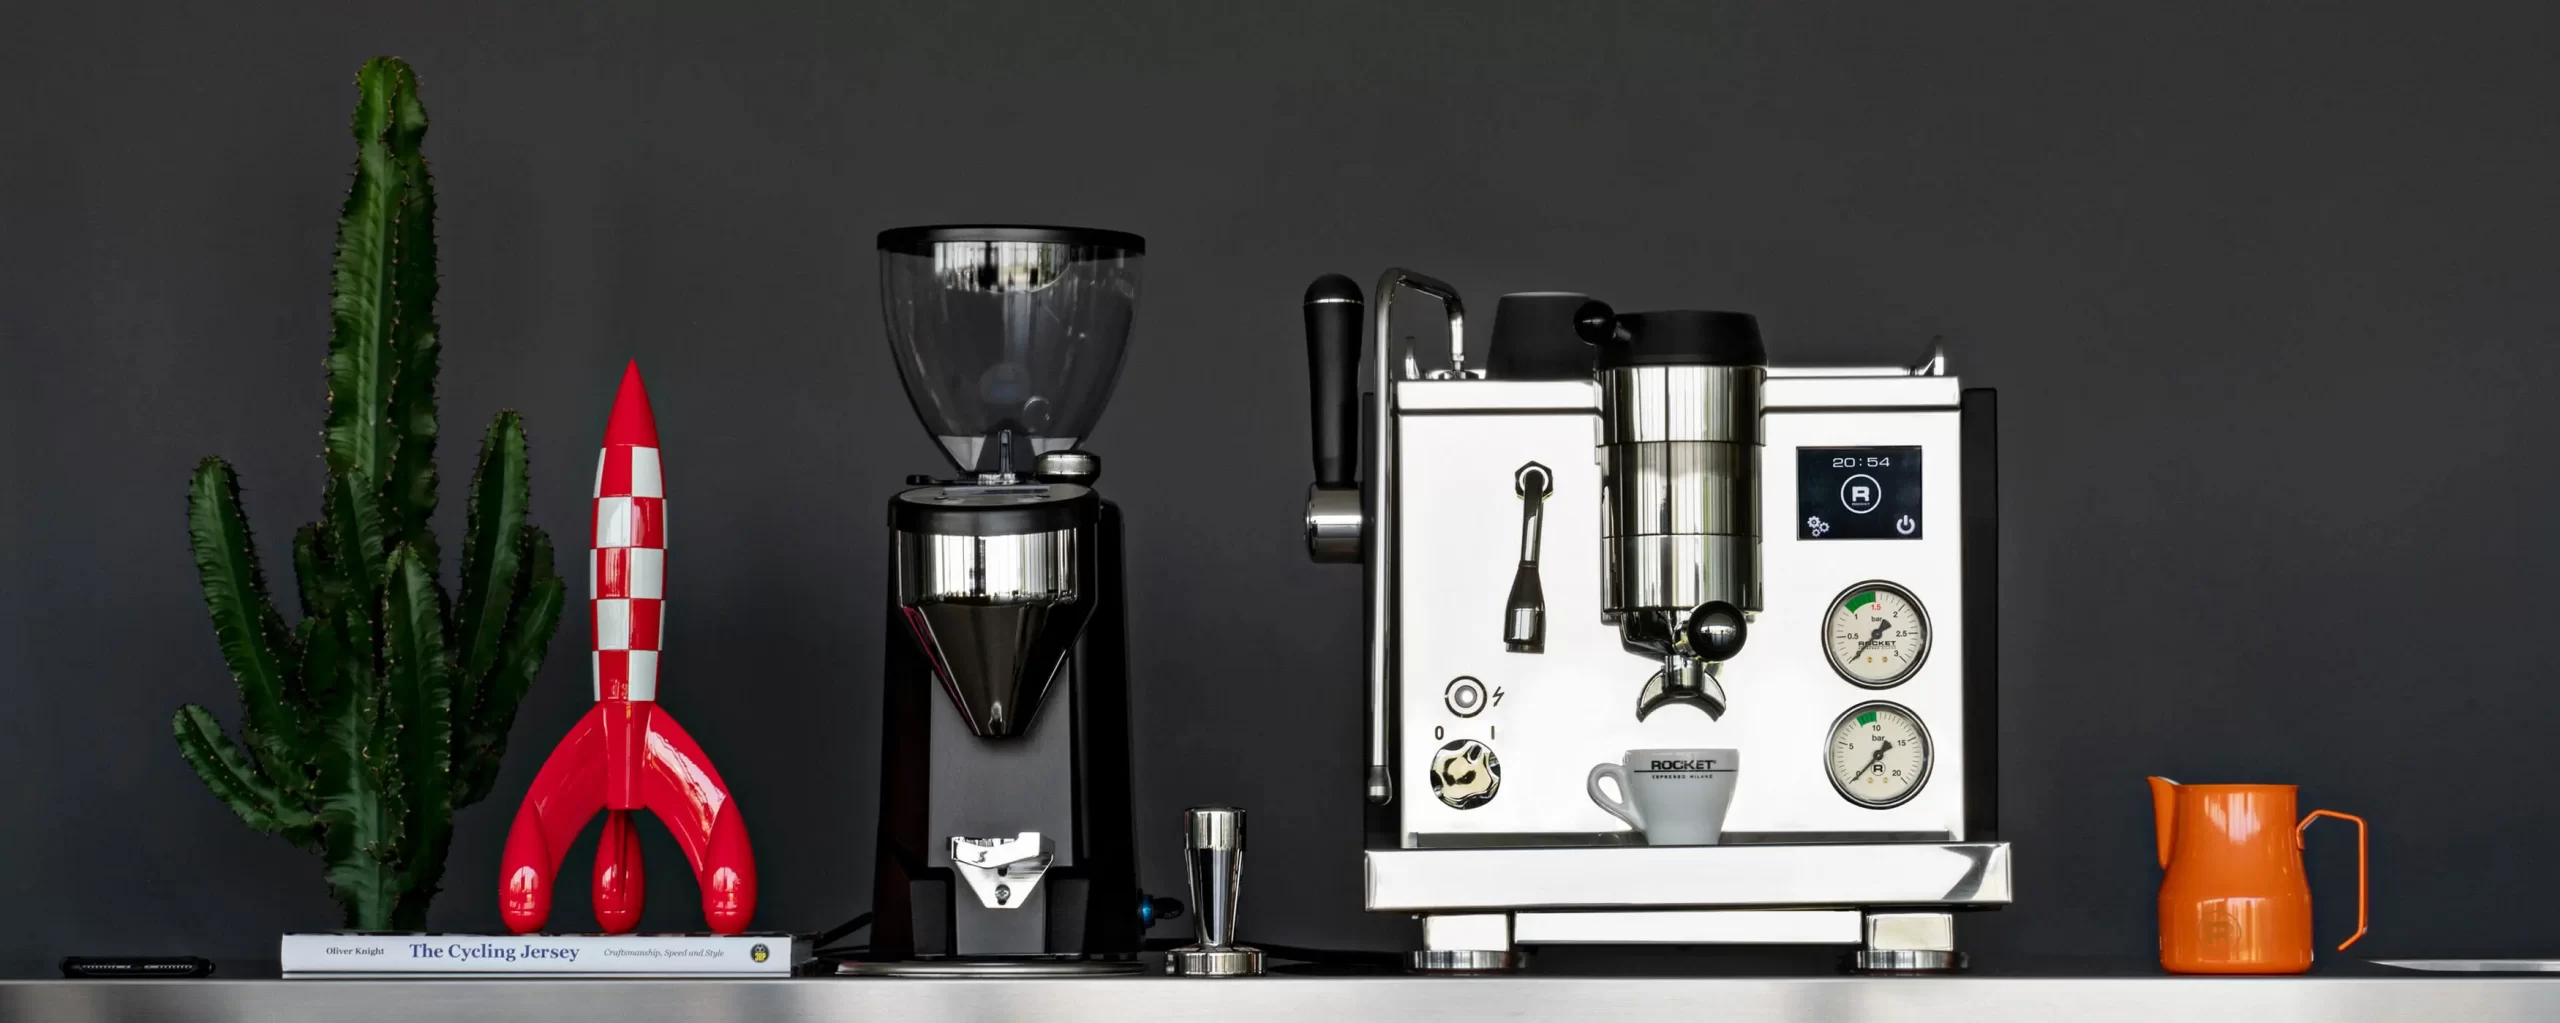 Rocket Espresso home coffee sitting besides a coffee grinder, coffee tamper, milk jug and decorative ornaments